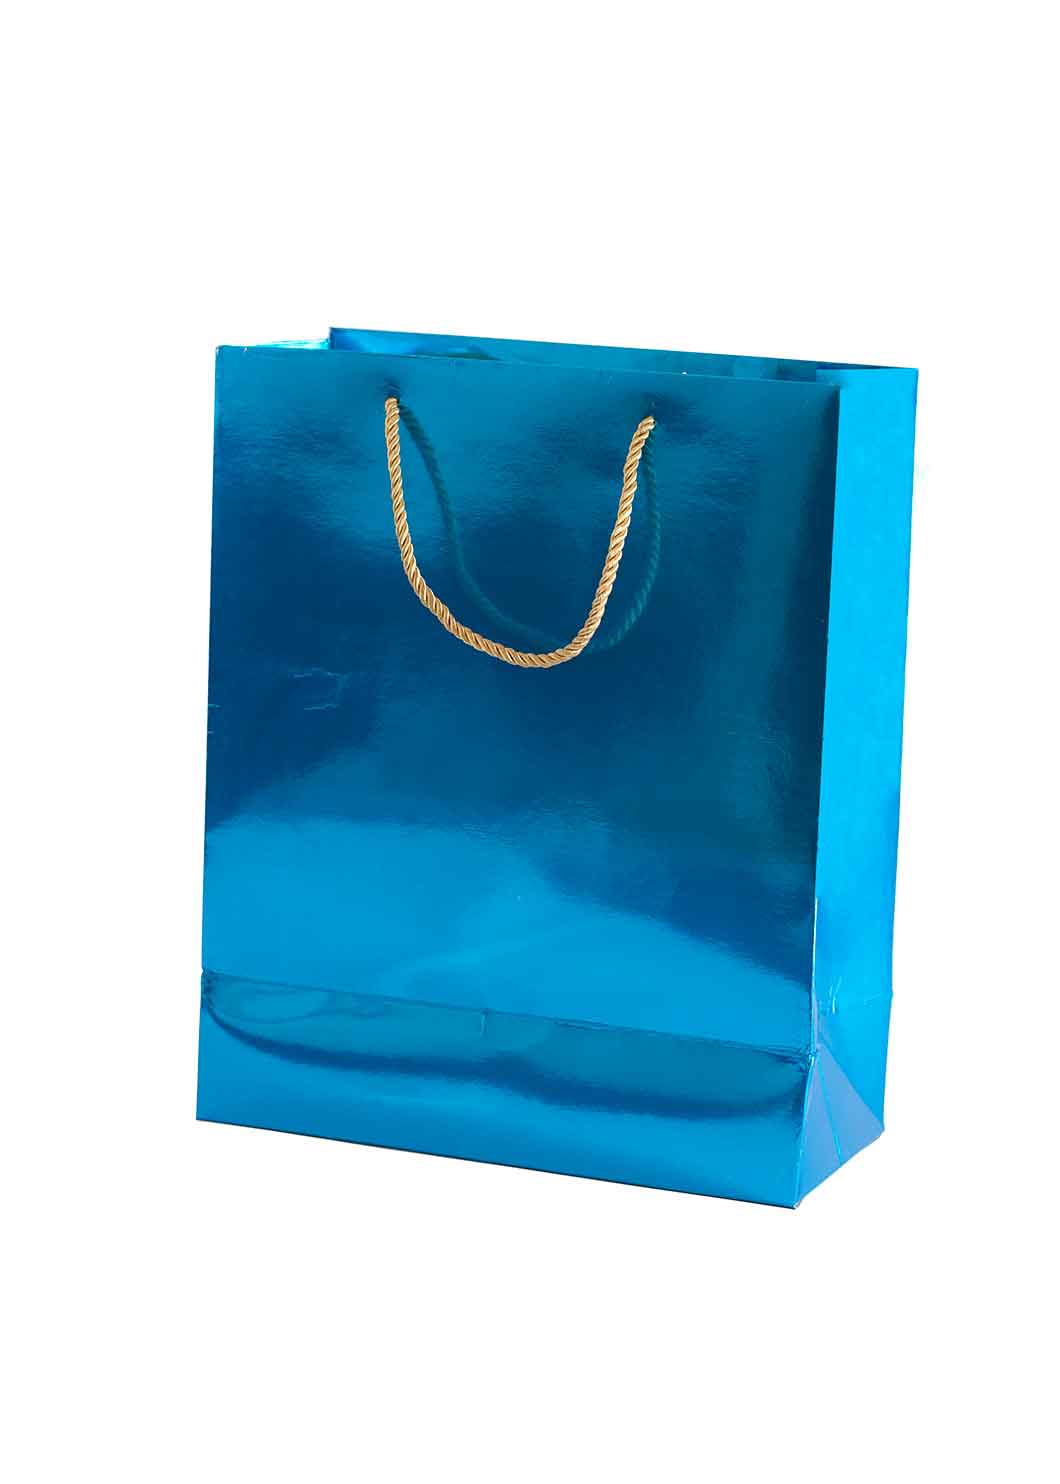 Shiny Bag - Plain Shiny Red Blue Bag With Handle - Laminated Paper Bag